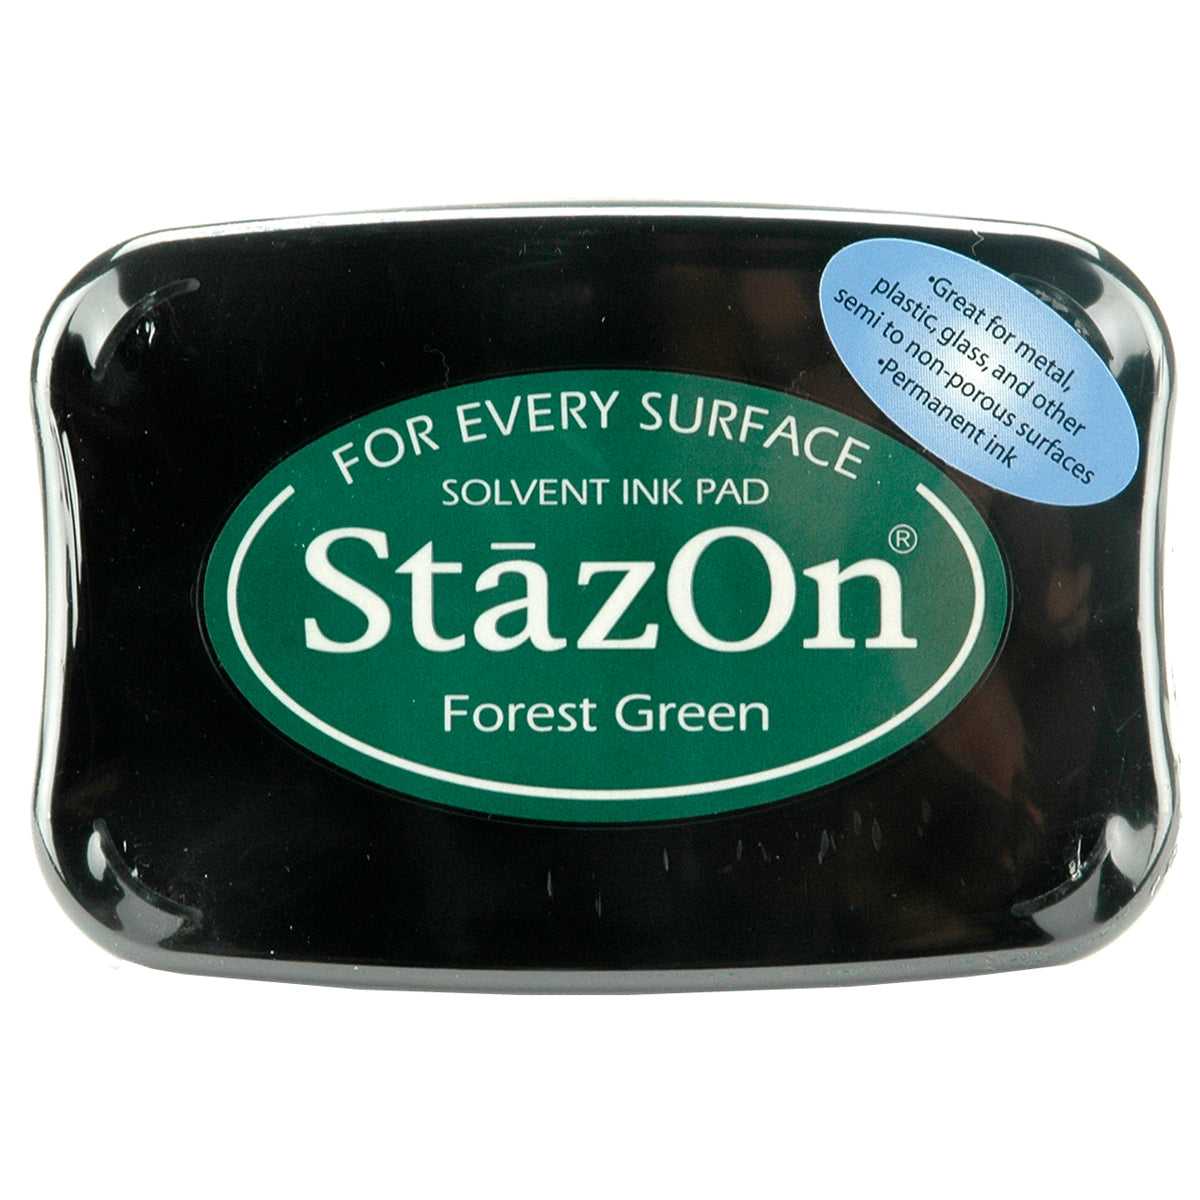 StazOn Forest Green / Tinta Solvente Bosque Verde